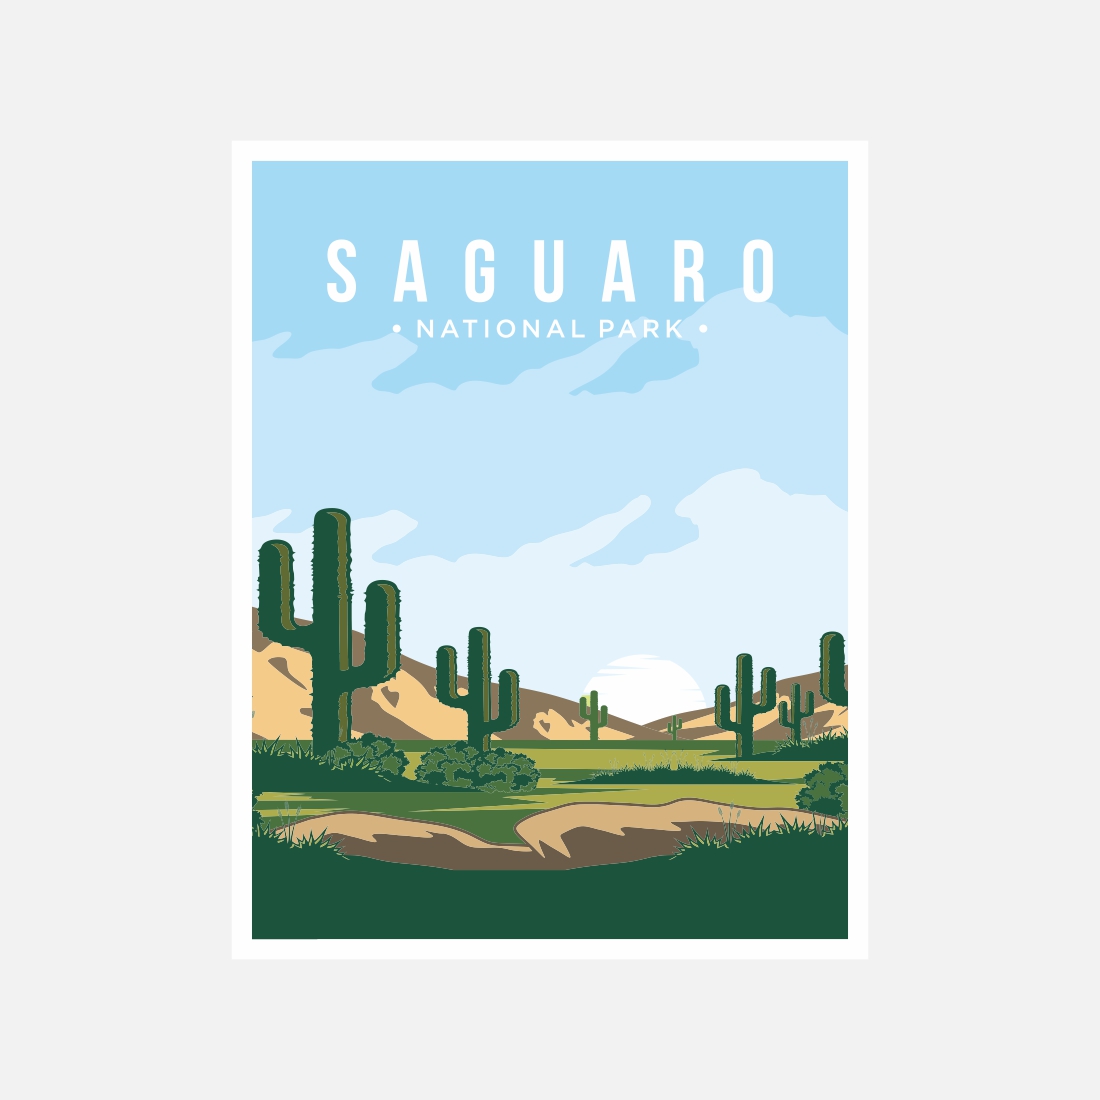 Saguaro National Park poster vector illustration design – Only $8 preview image.